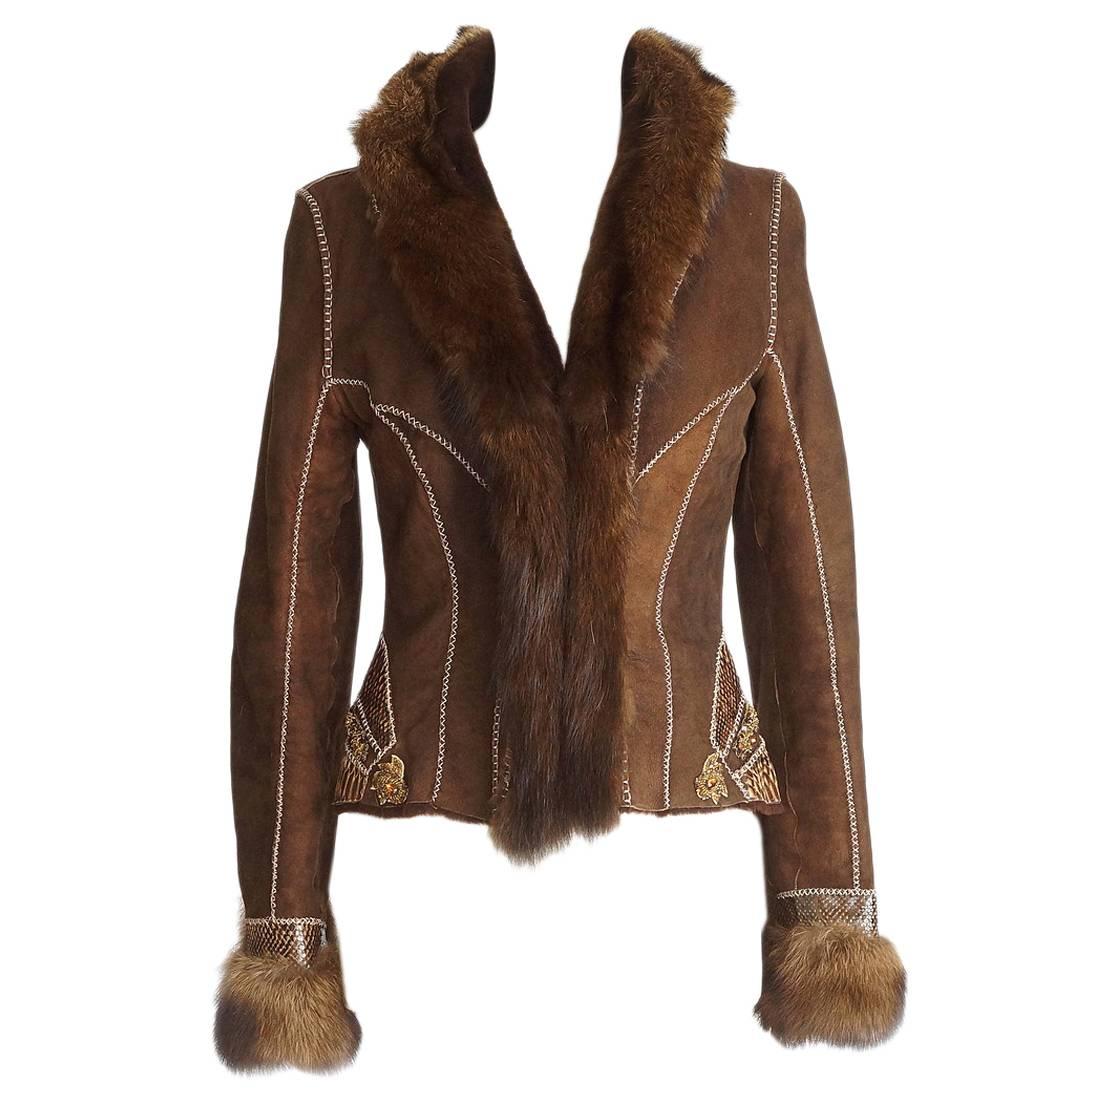 ROBERTO CAVALLI jacket shearling fisher fur snakeskin jewel trim EXQUISITE  44/6